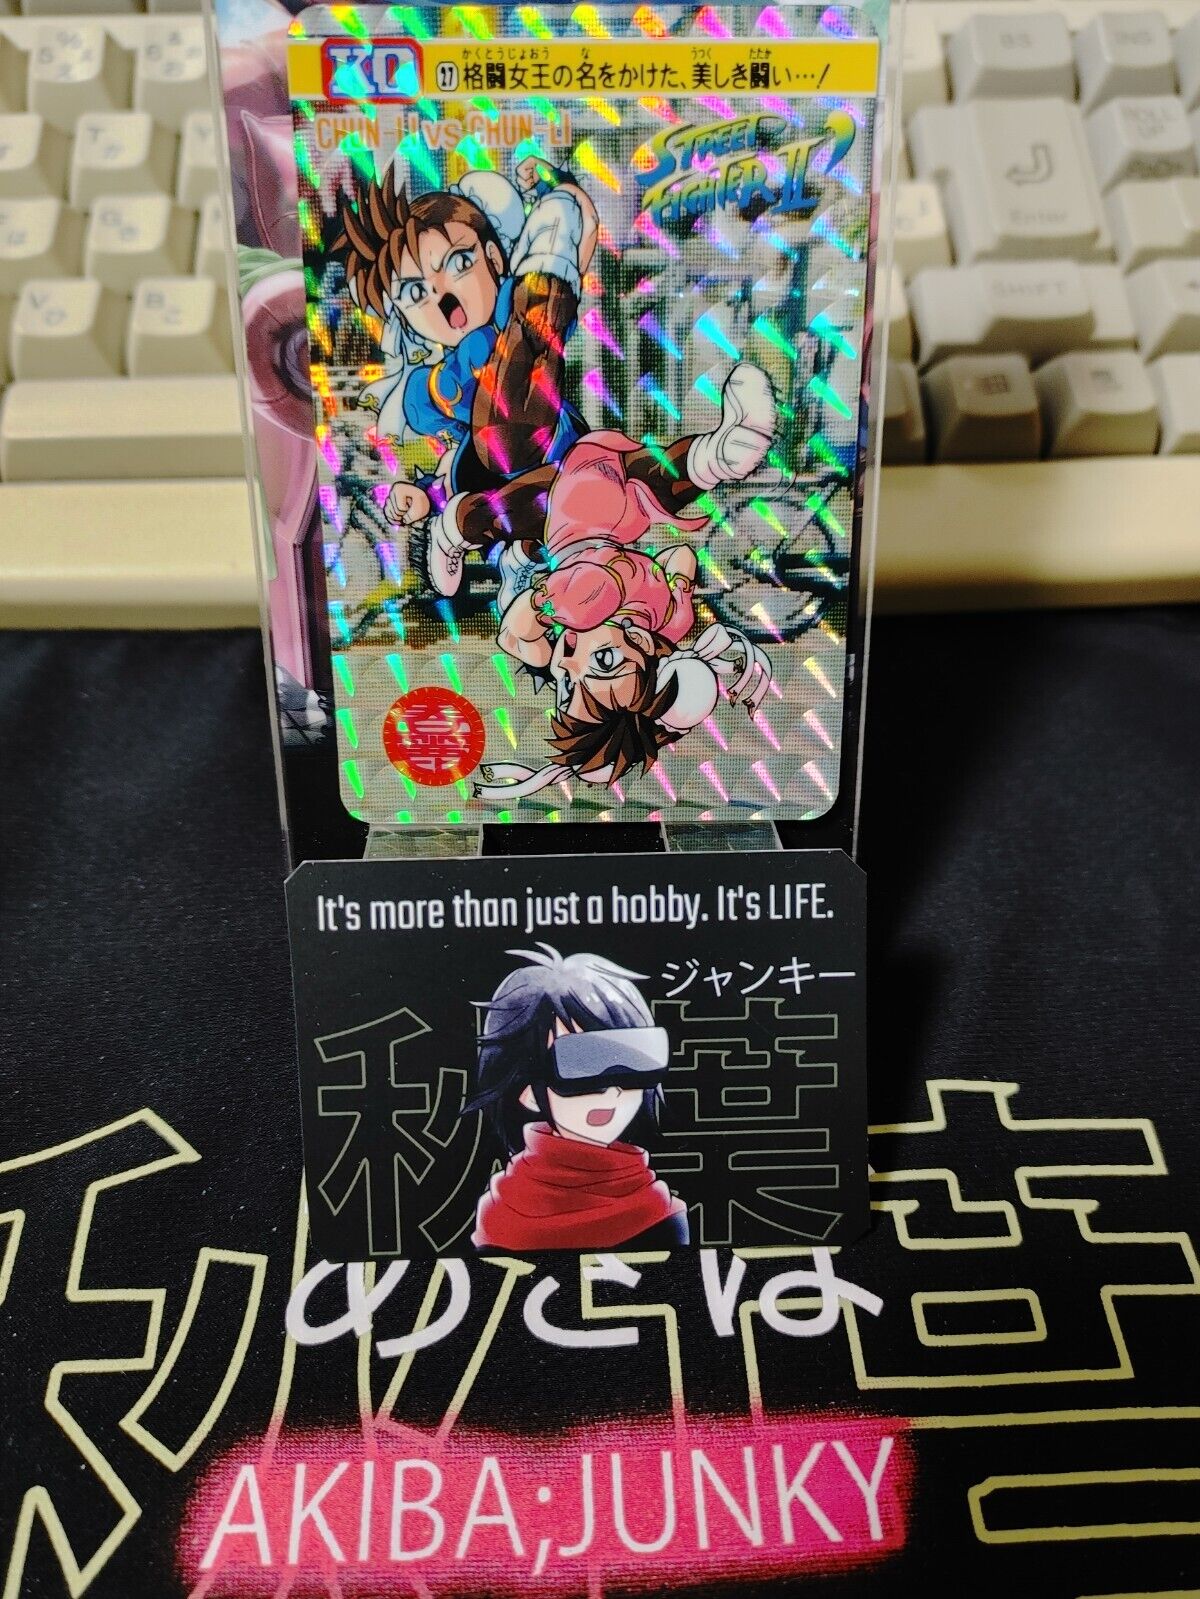 Street Fighter II Chun-li Guile Carddass Card #27 Japanese Vintage Japan HOLO